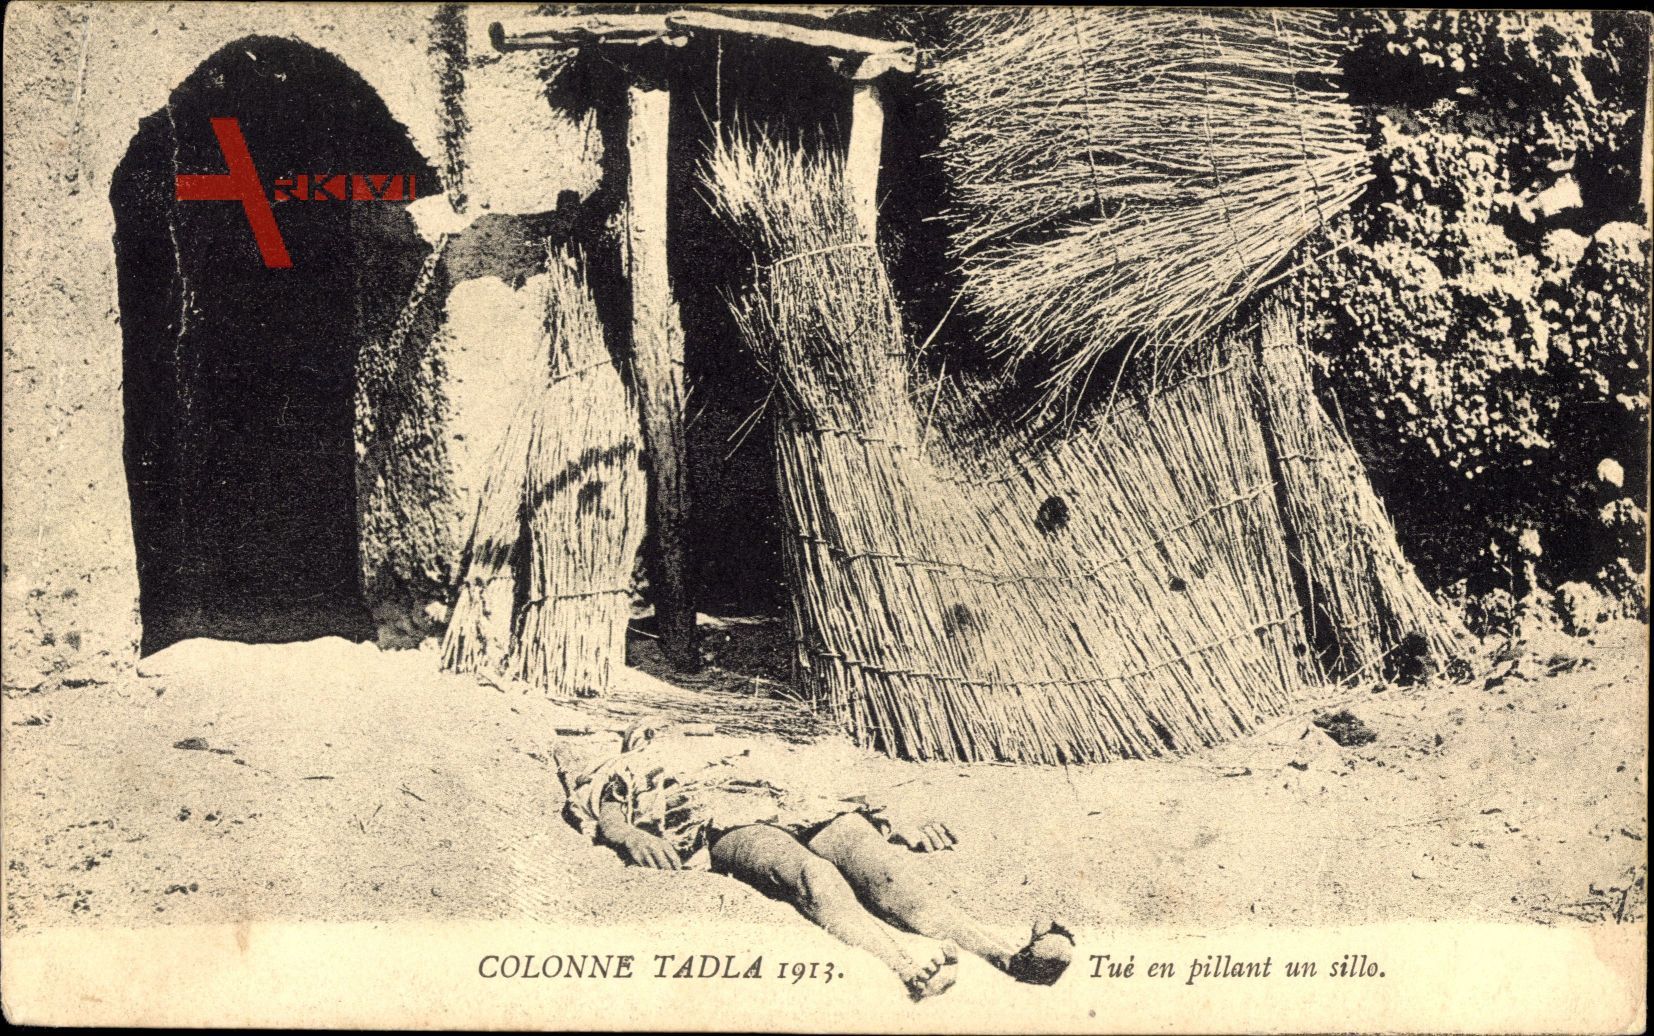 Marokko, Colonne Tadla 1913, Tué en pillant un sillo, Toter im Sand